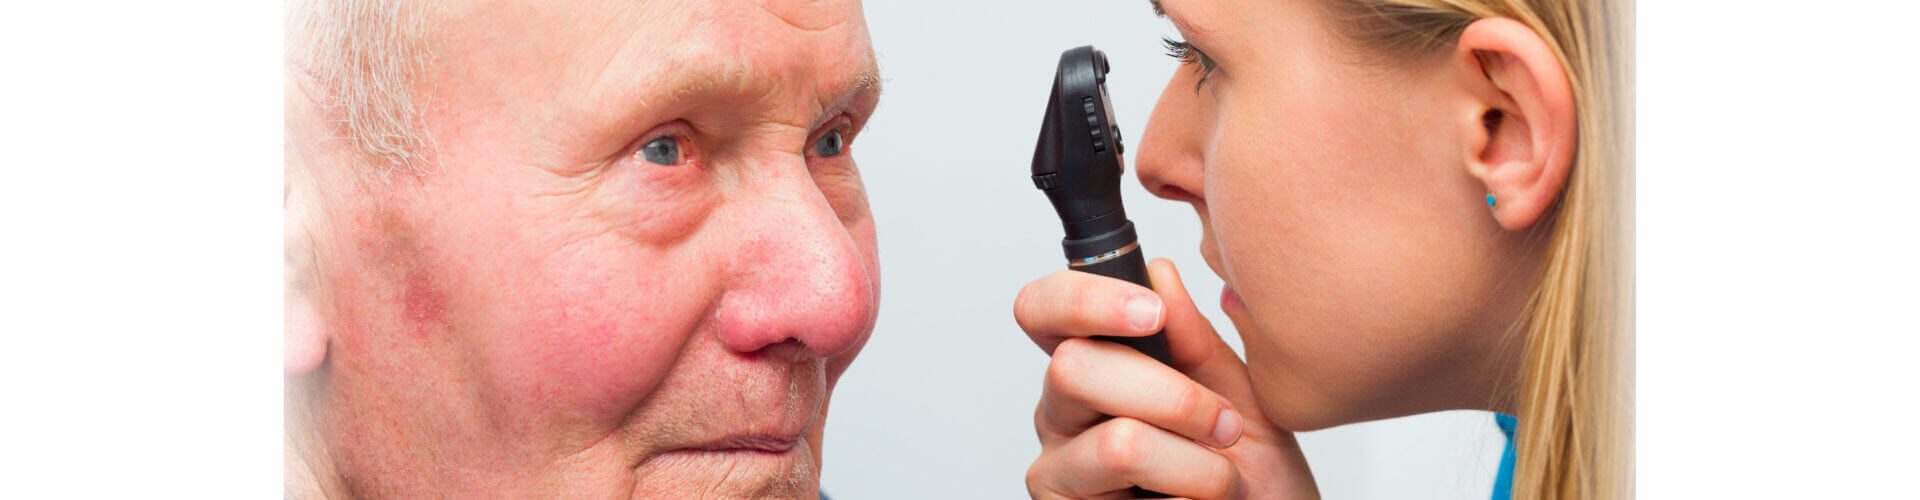 optician consulting elderly patient